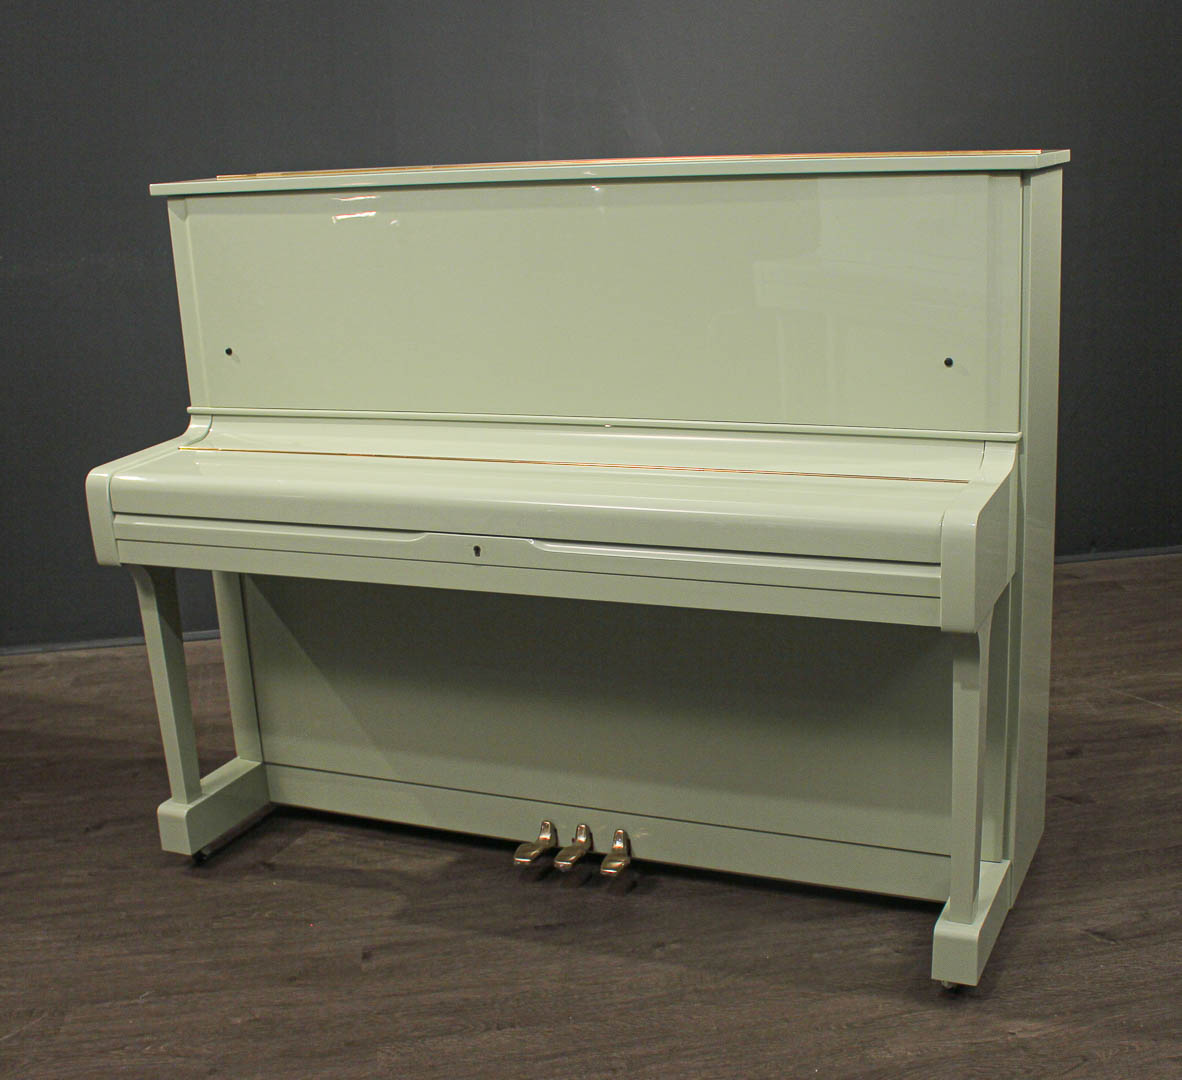 Yamaha U1 48'' Studio Upright Piano Polished Aspen Green | Upright Pianos